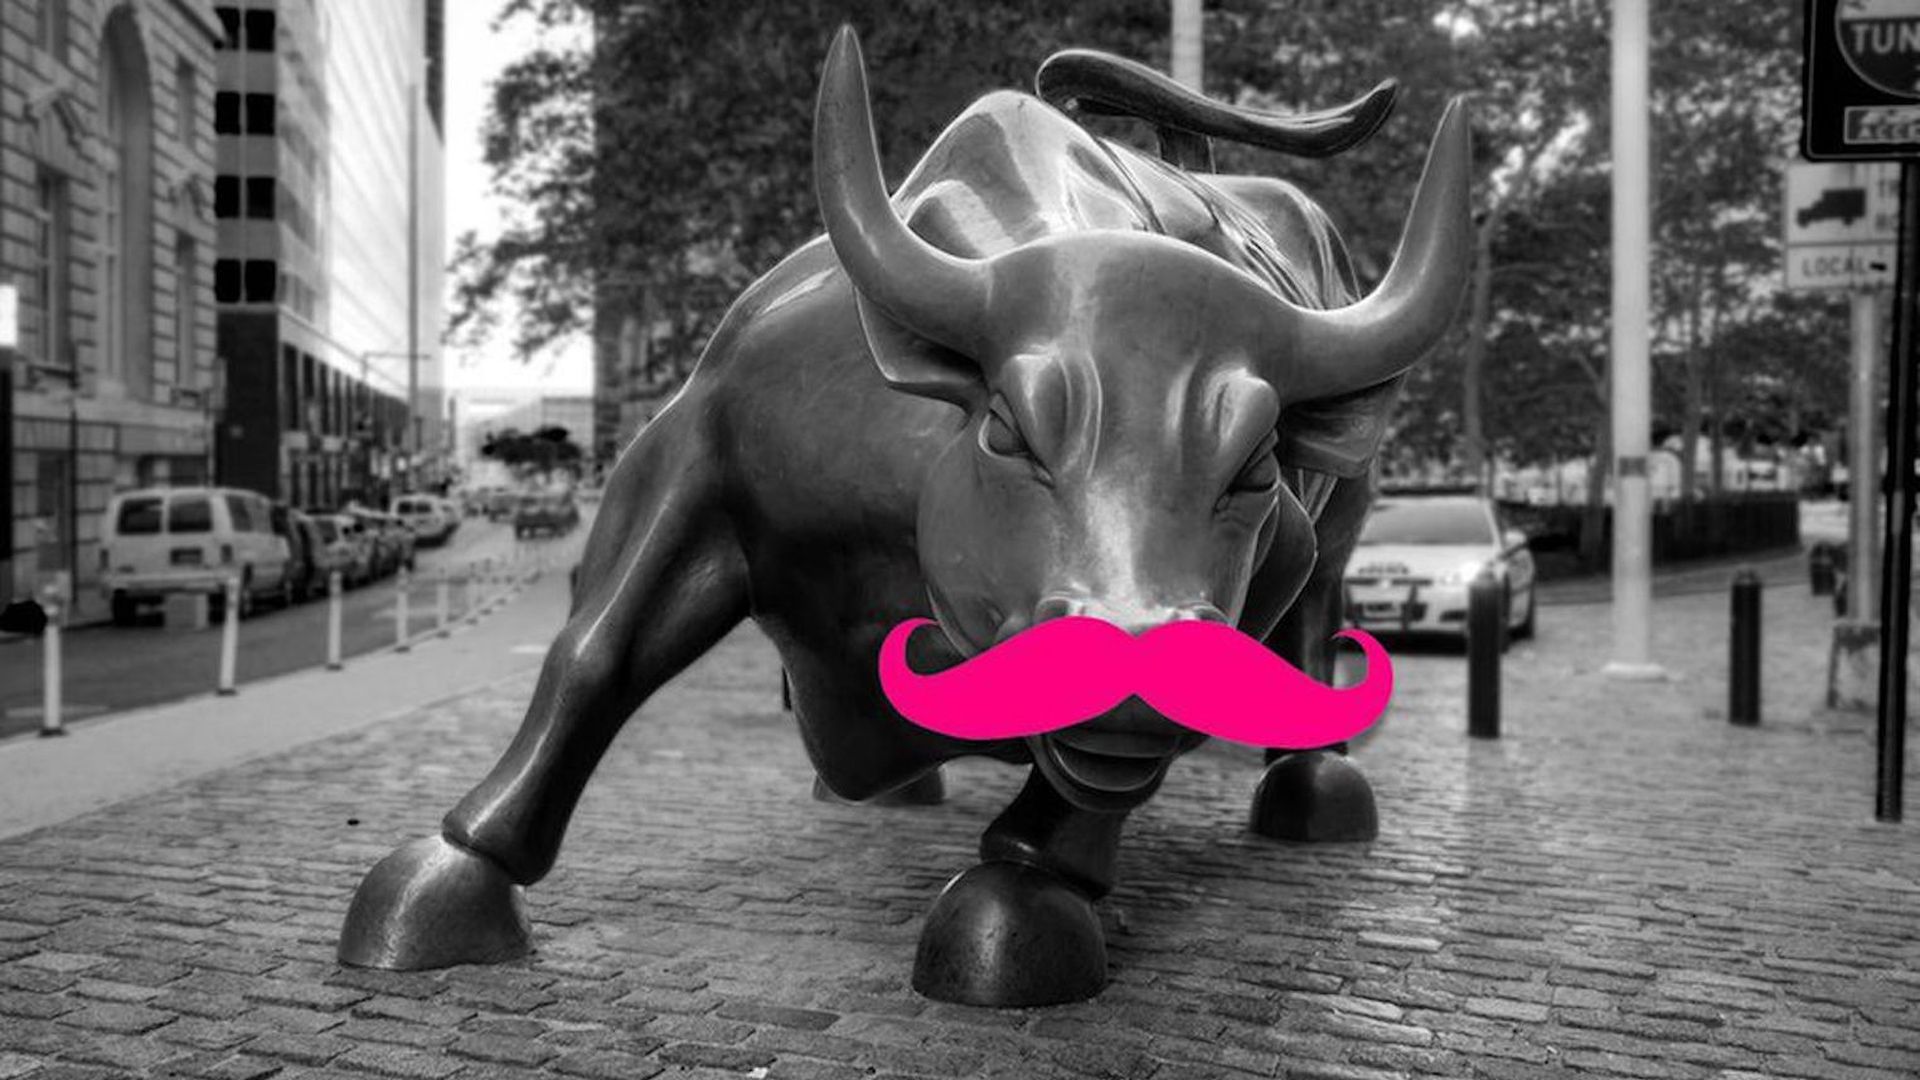 Photo illustration of Wall Street market bull statue with Lyft's pink mustache.